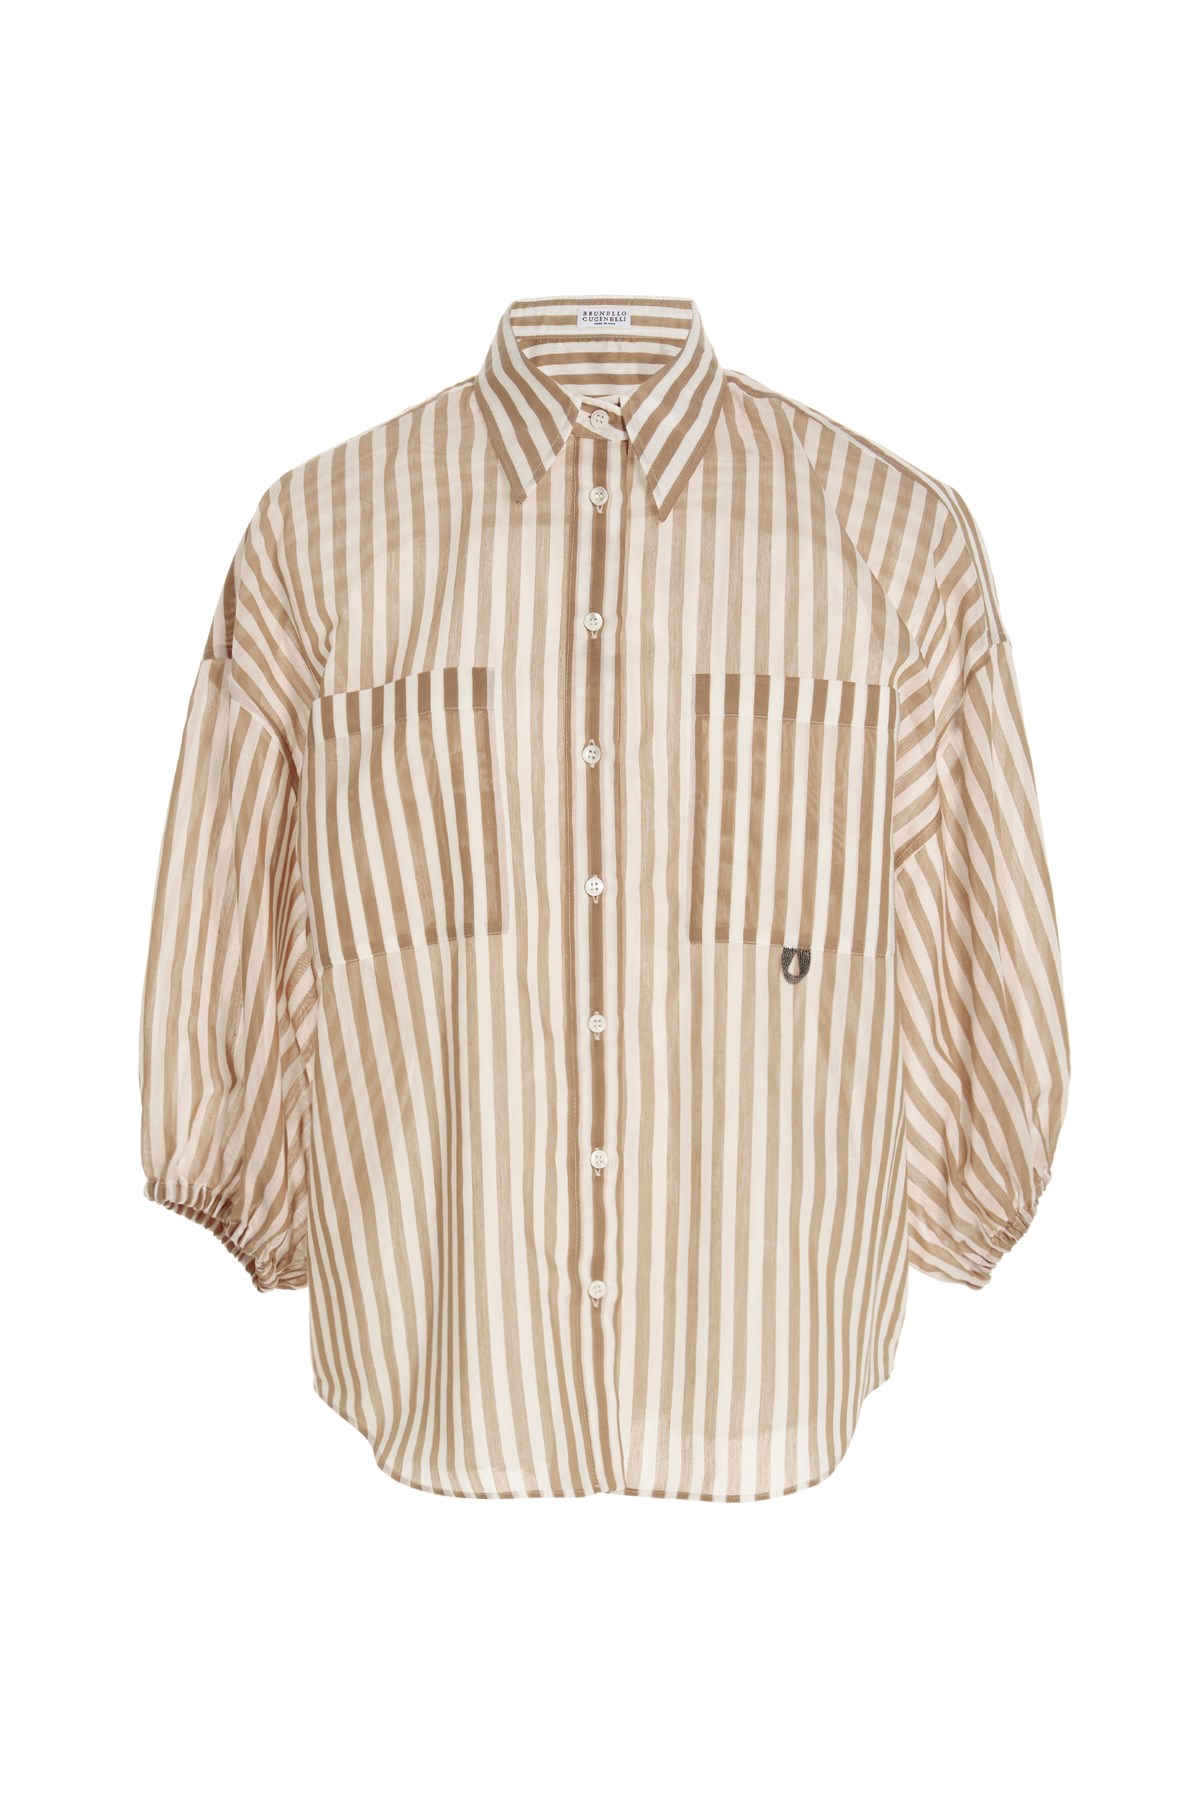 BRUNELLO CUCINELLI Stripe Shirt